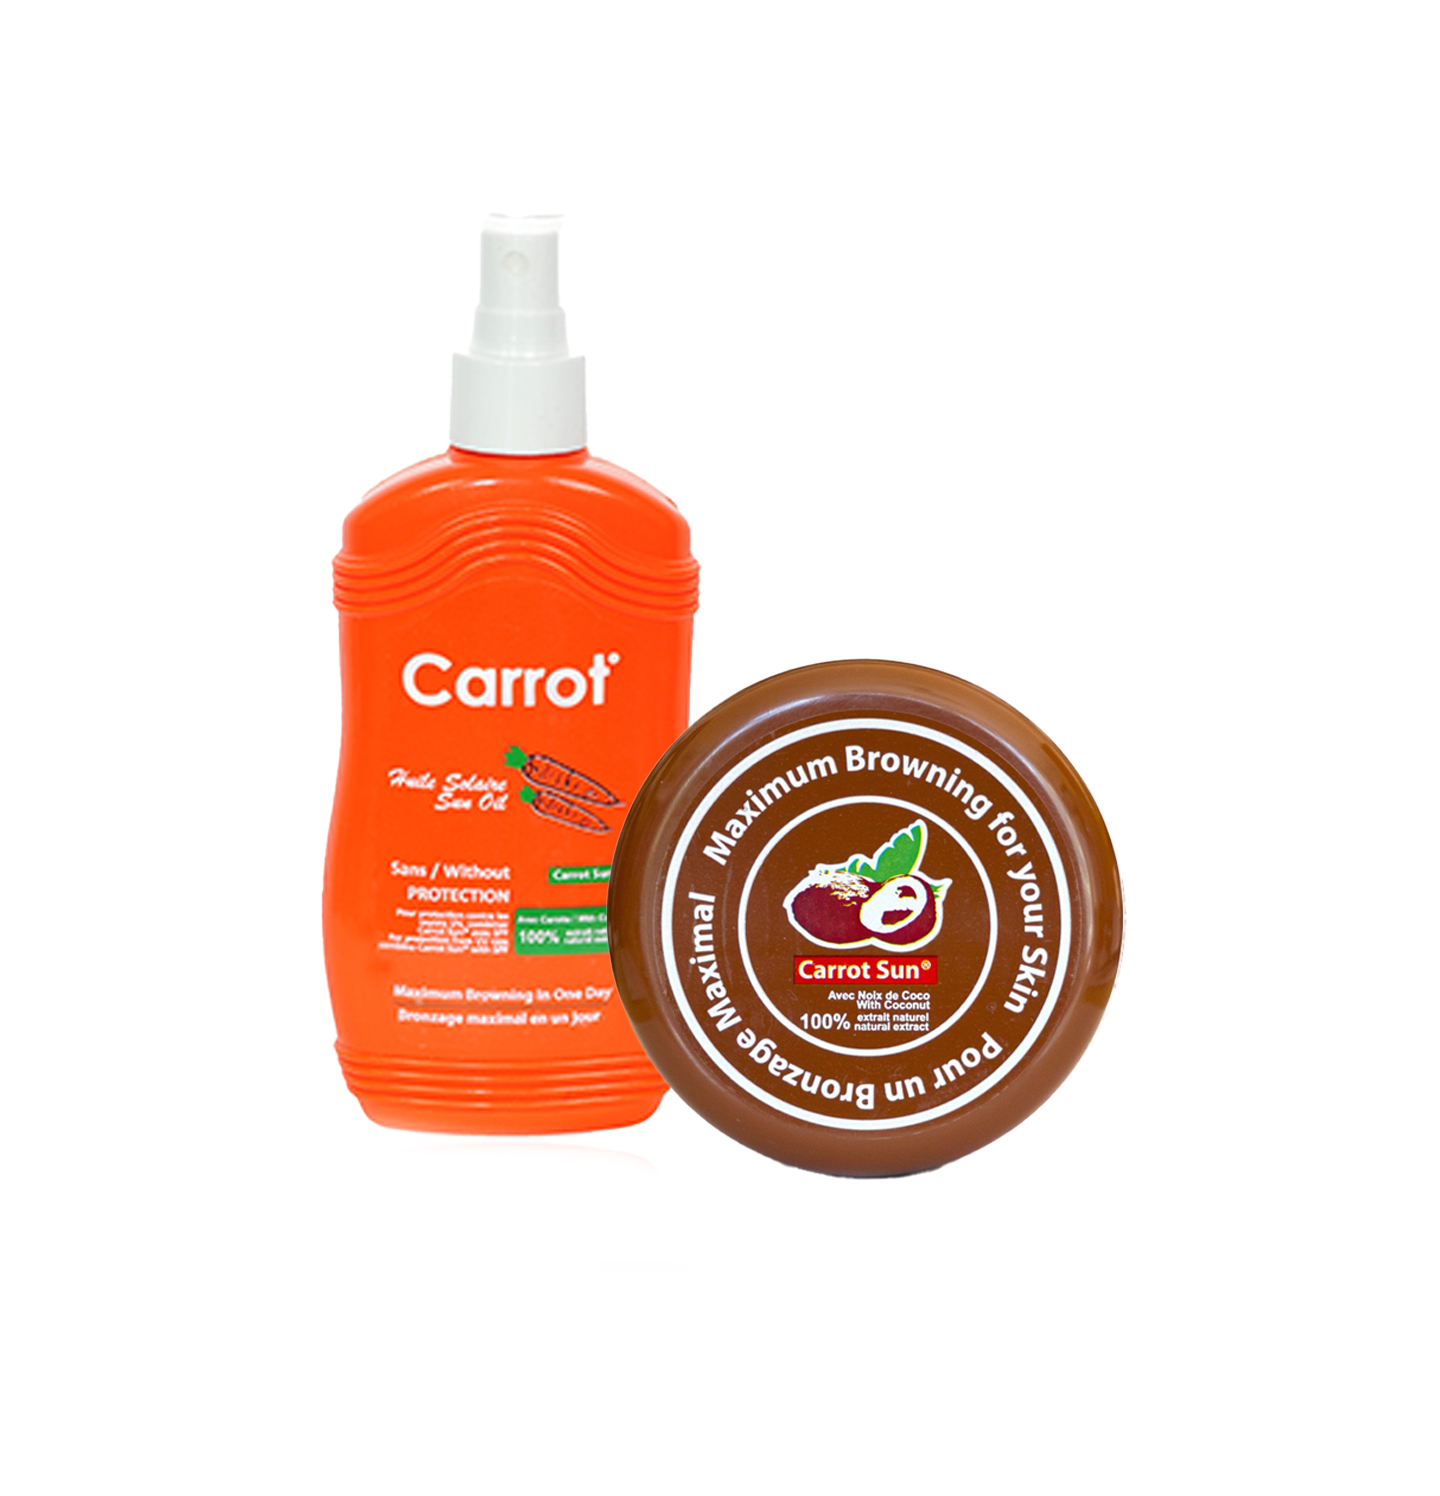 Carrot Sun Combo Original and Coconut